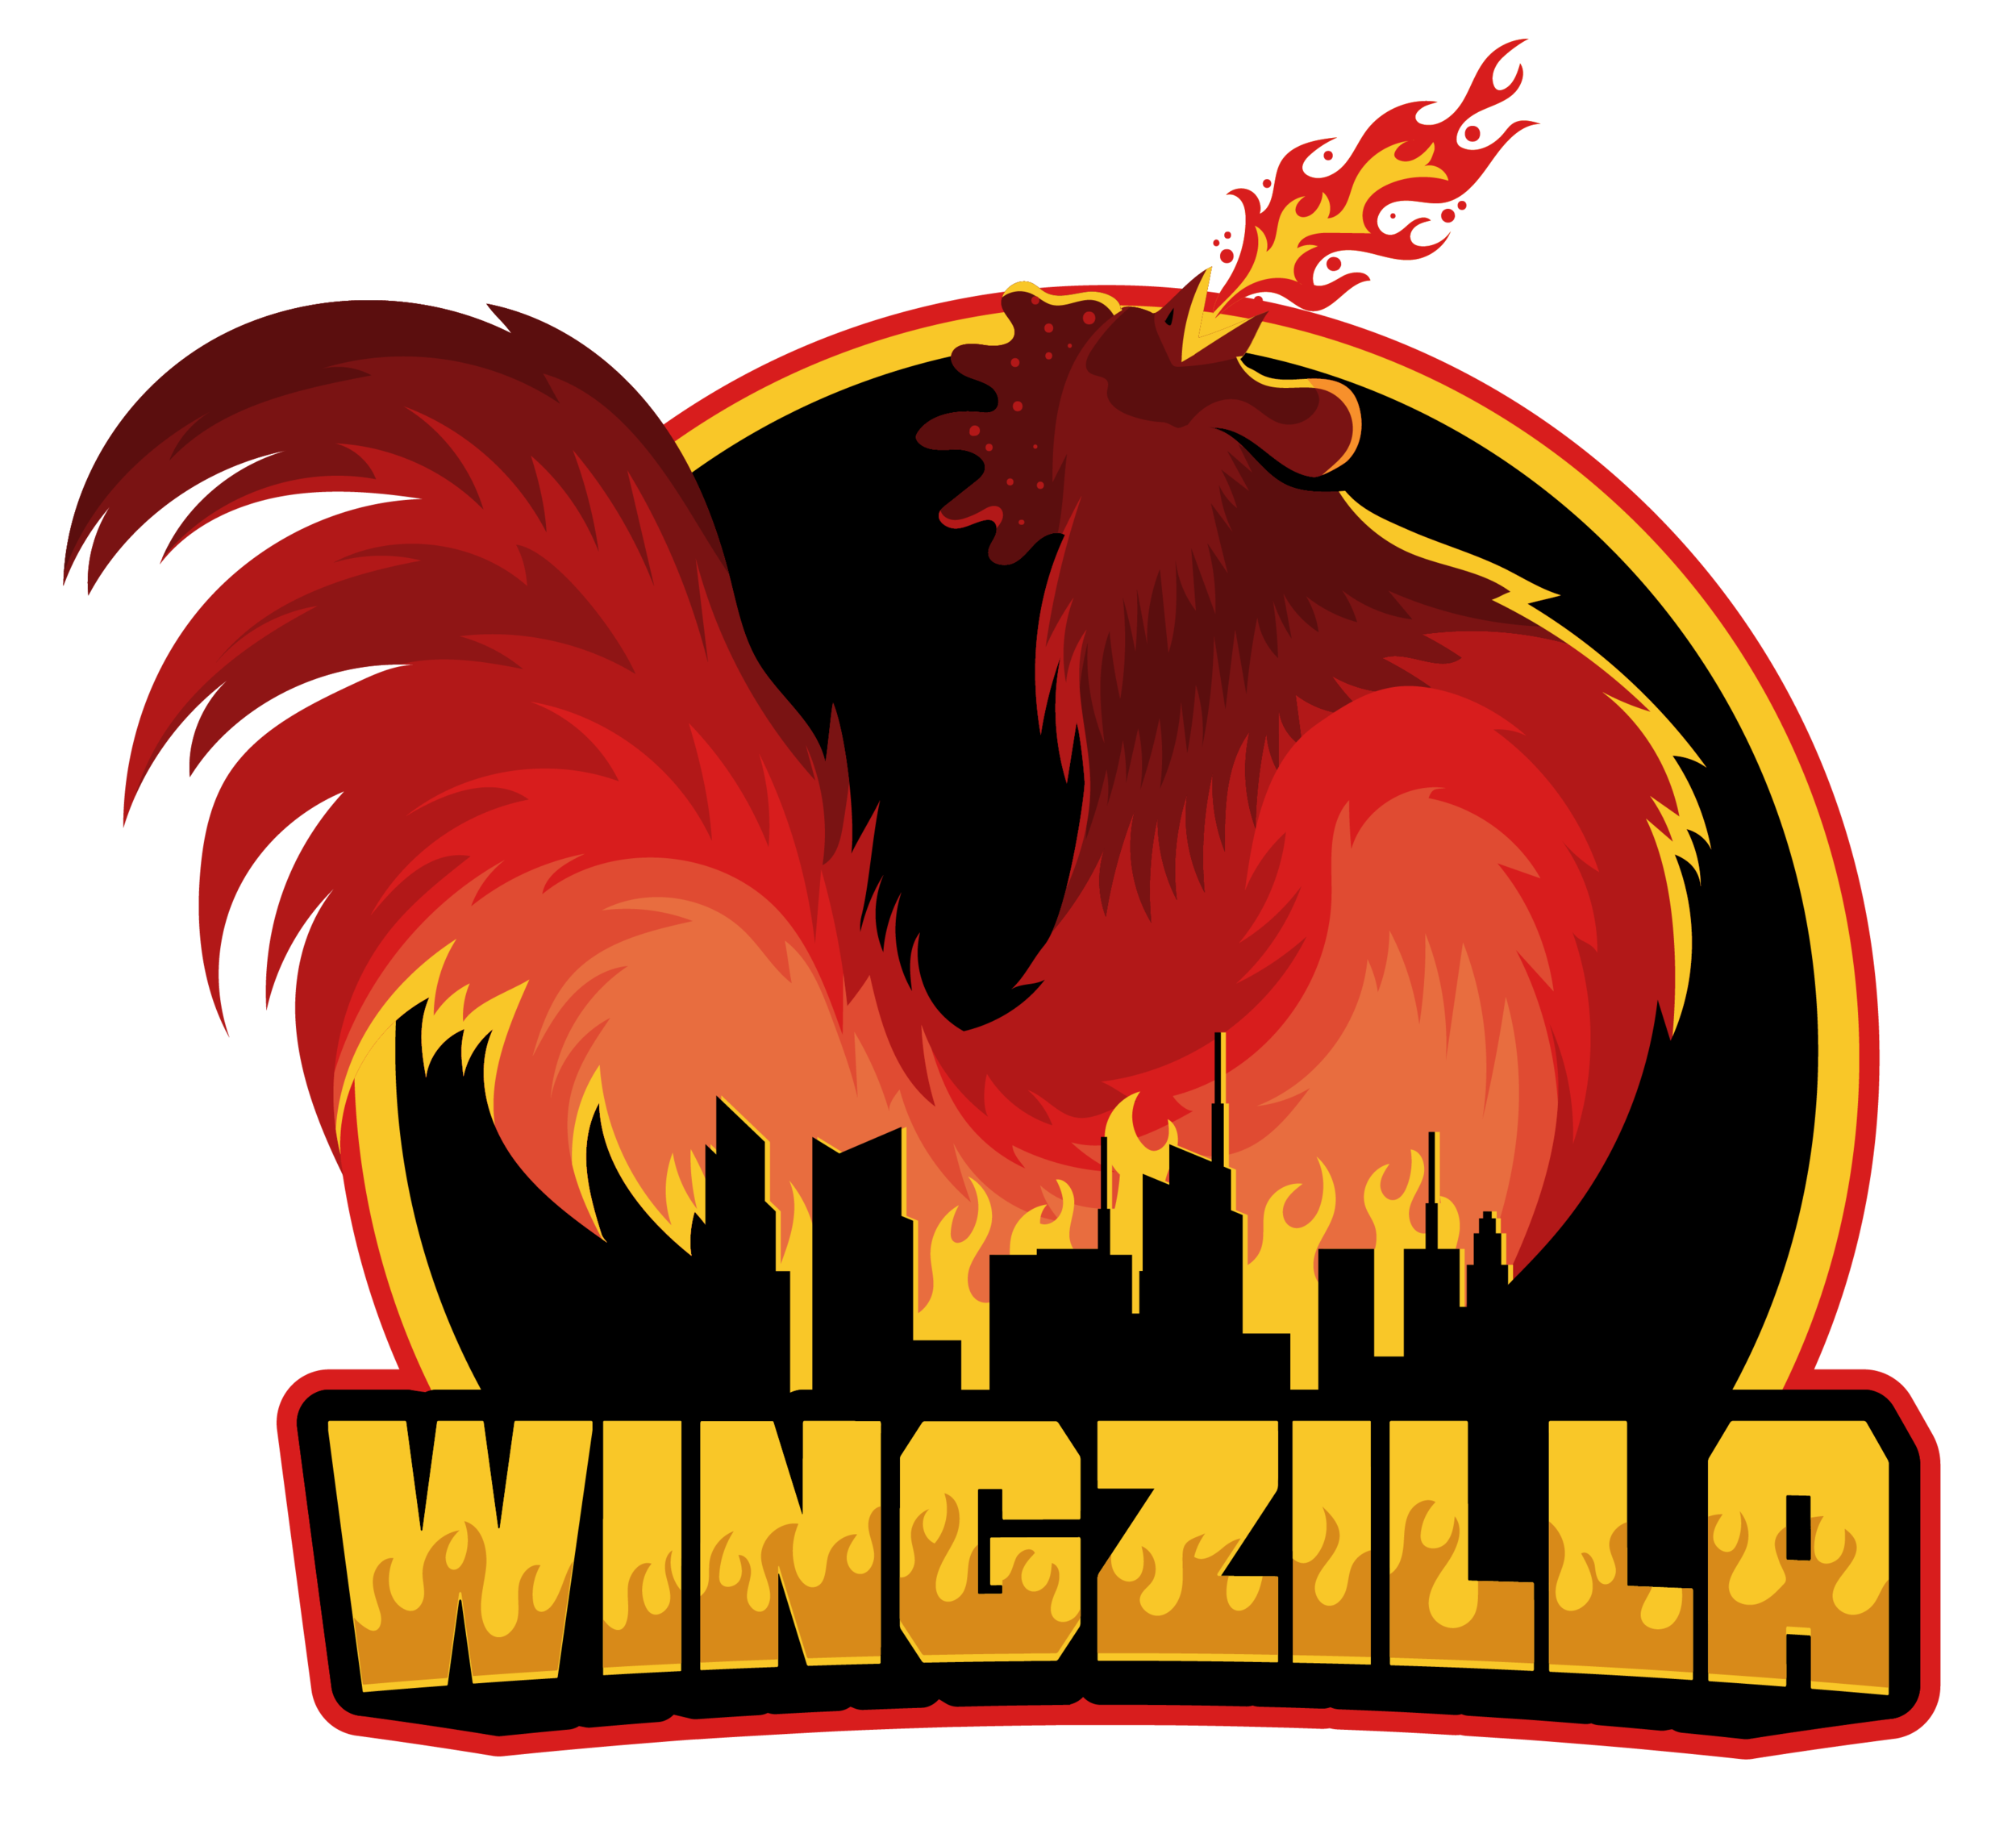 Wingzilla-01.png